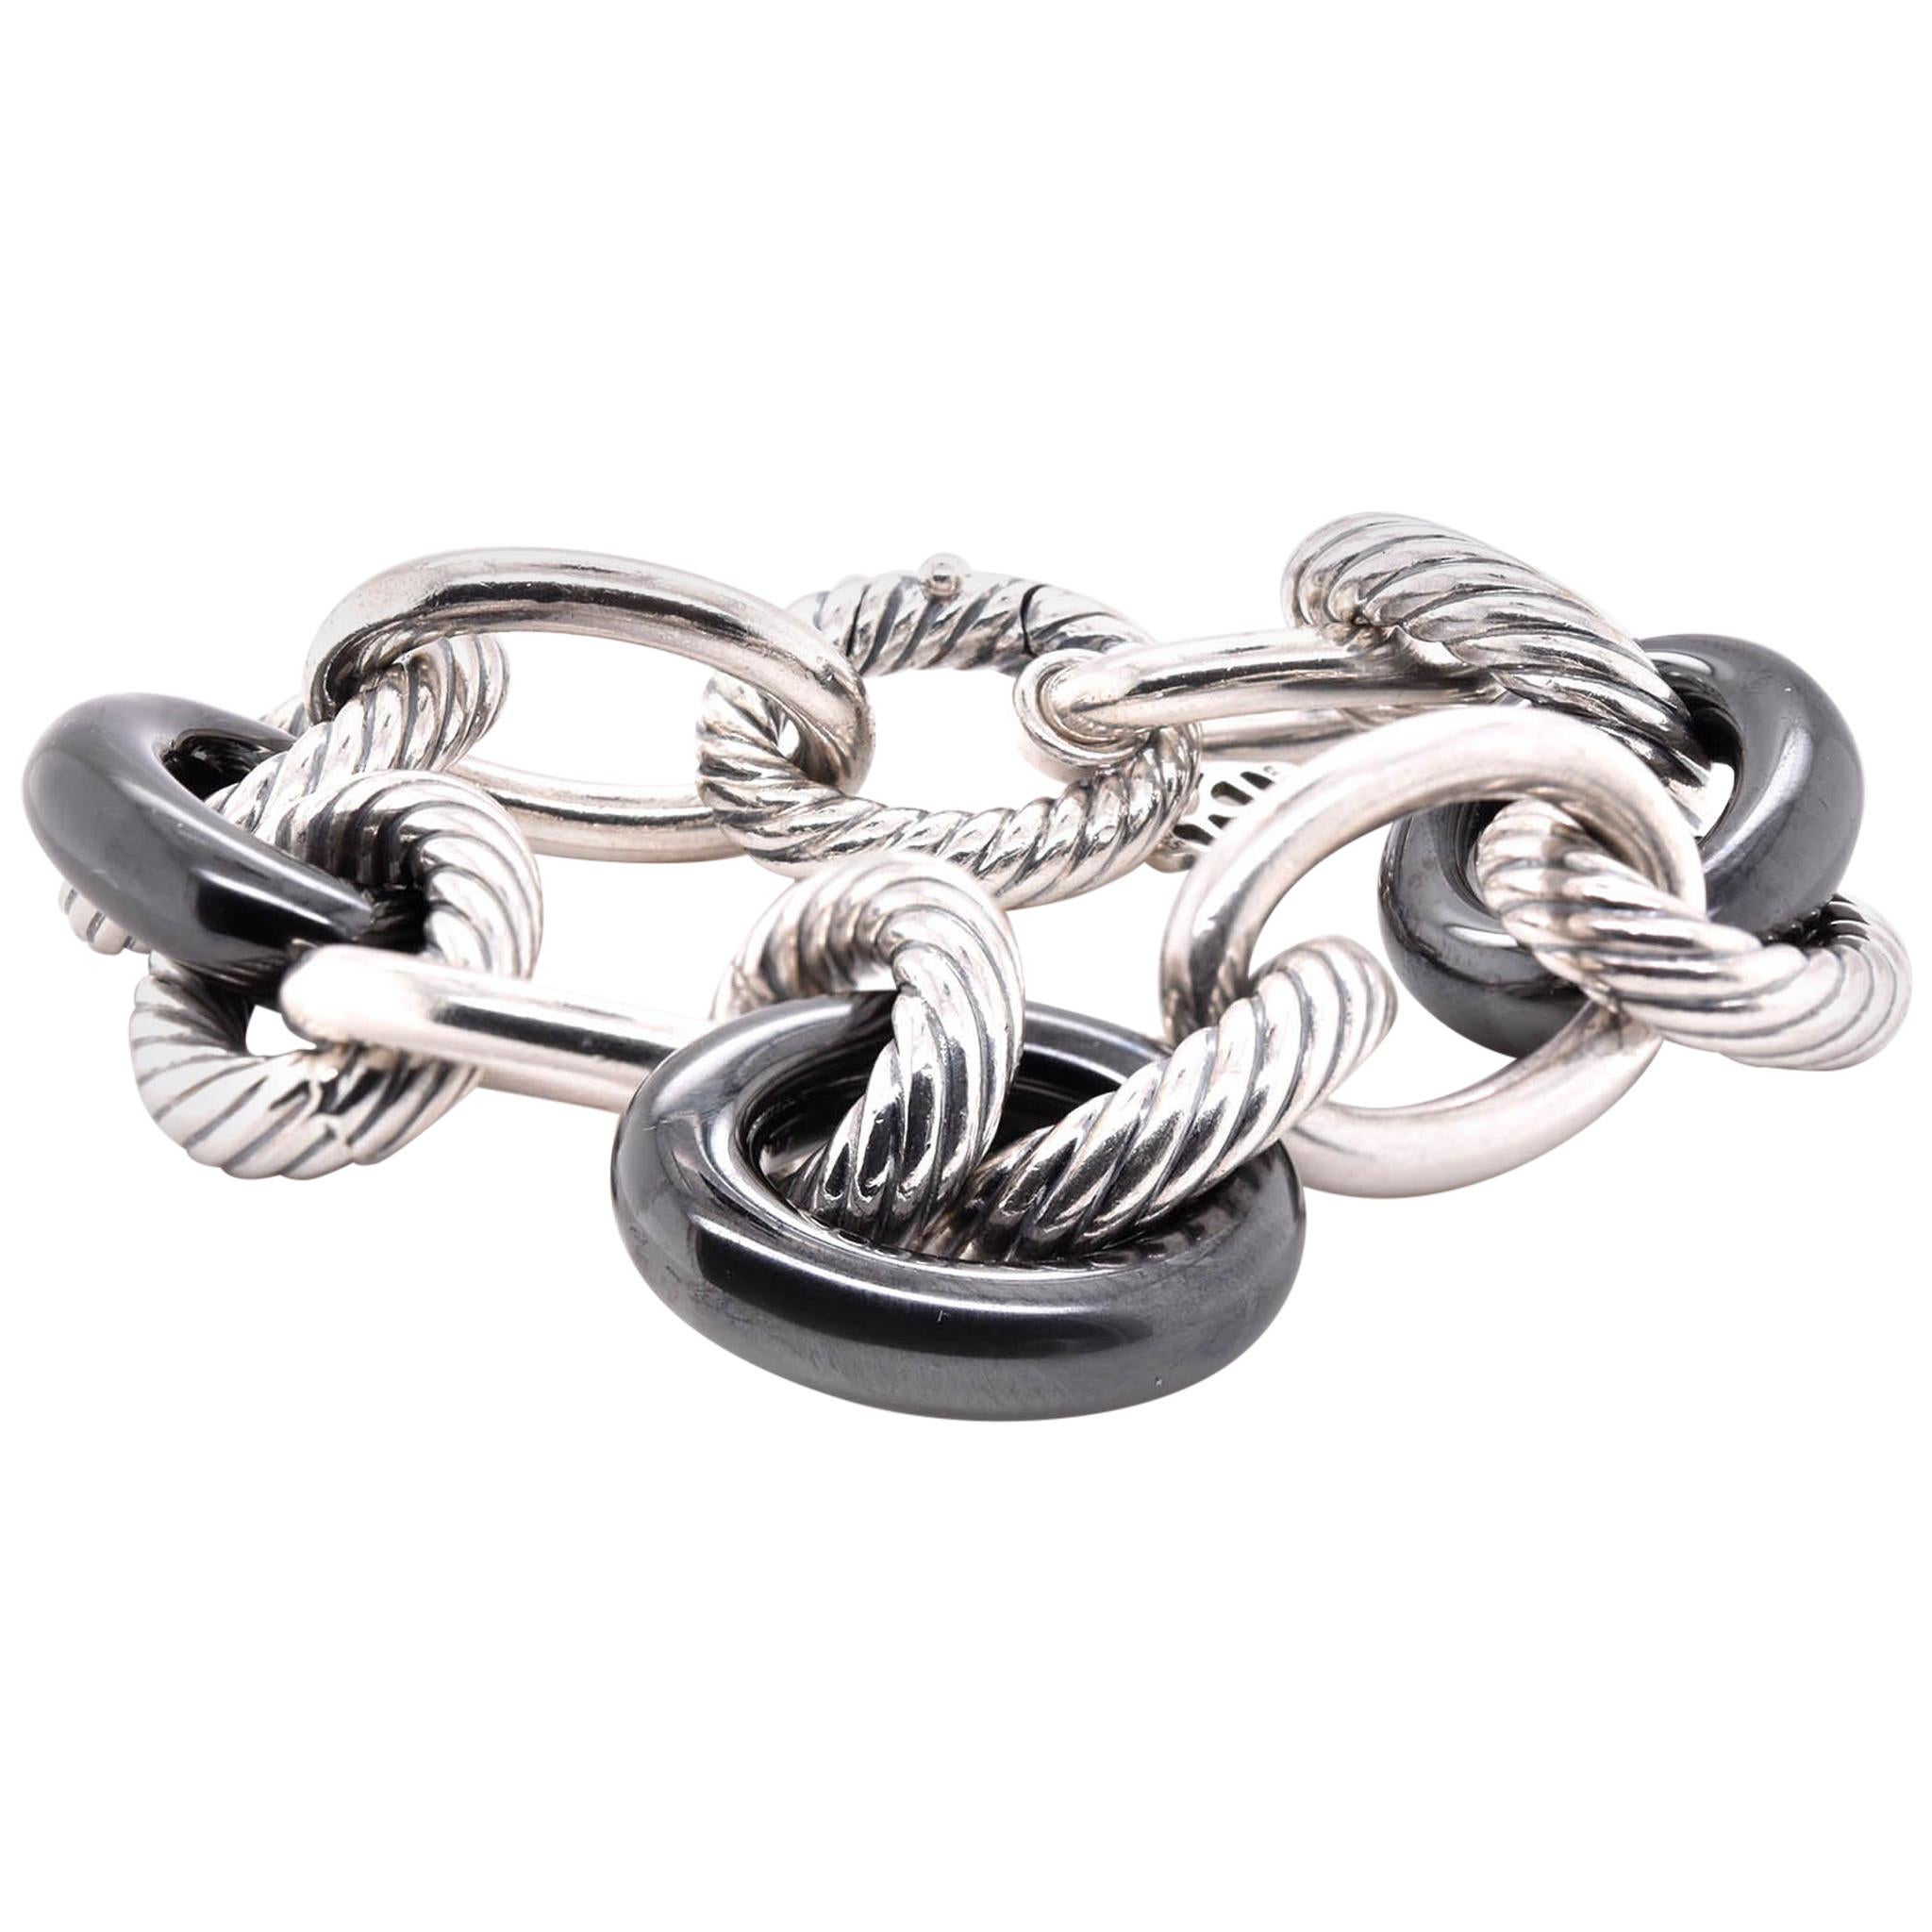 David Yurman Sterling Silver and Black Ceramic Oval Link Bracelet